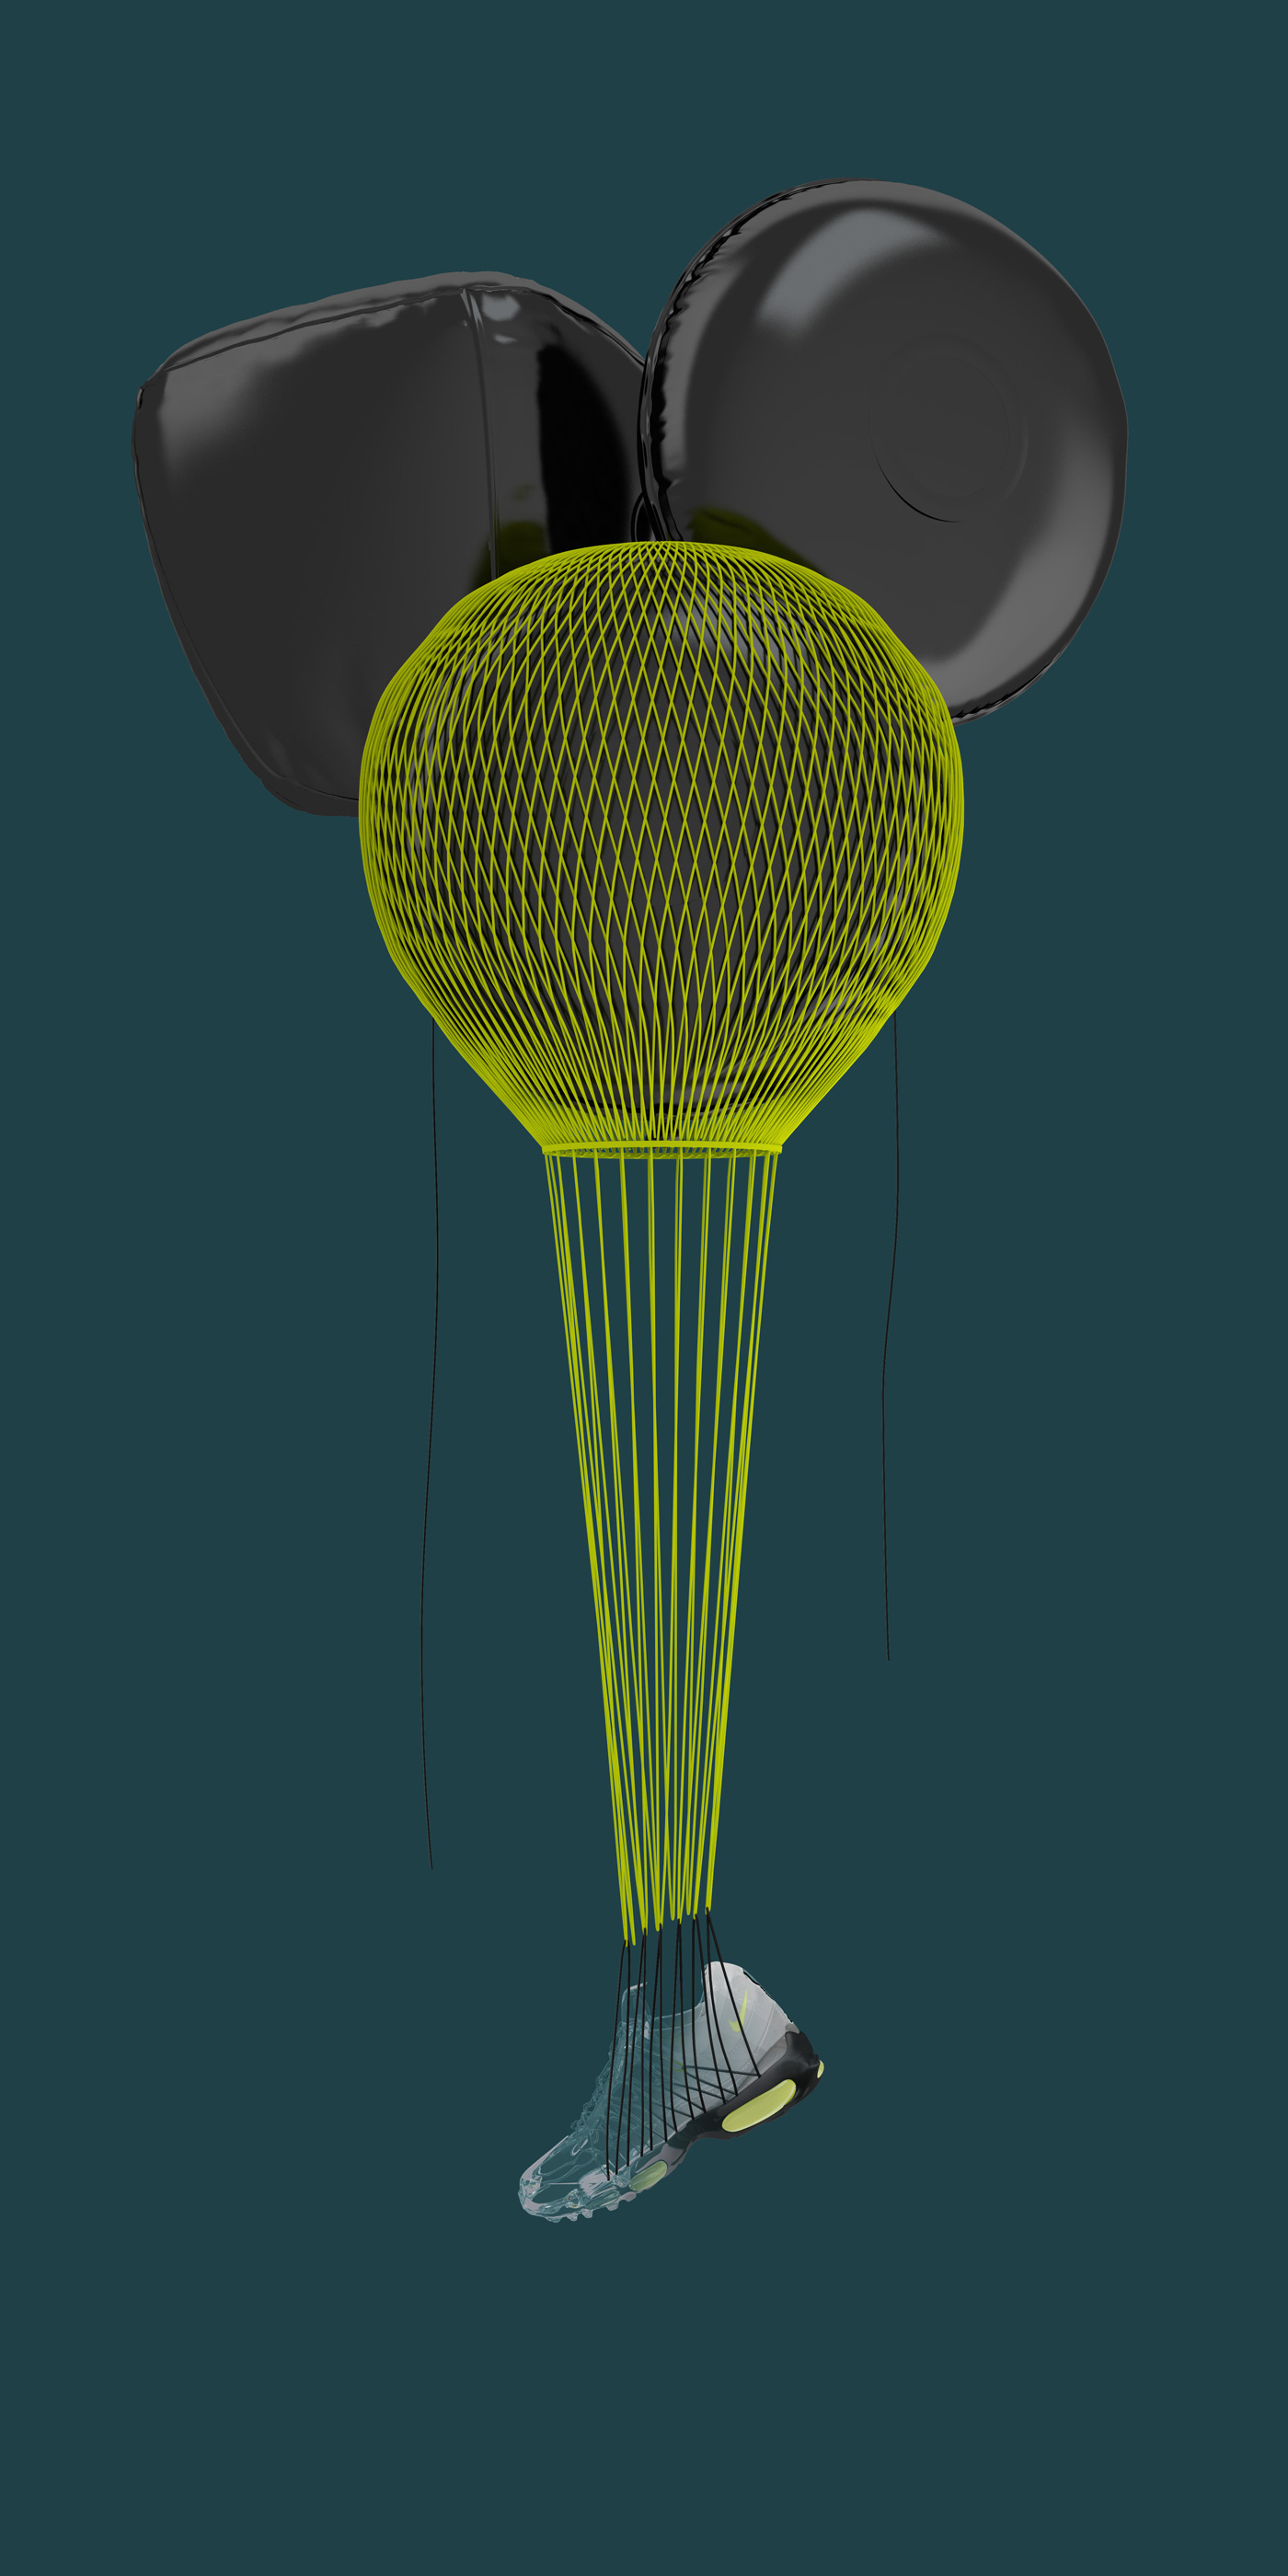 Nike sneaker advert CGI slime green balloon CG TYPE 3D Type cg illustration 3D illustration